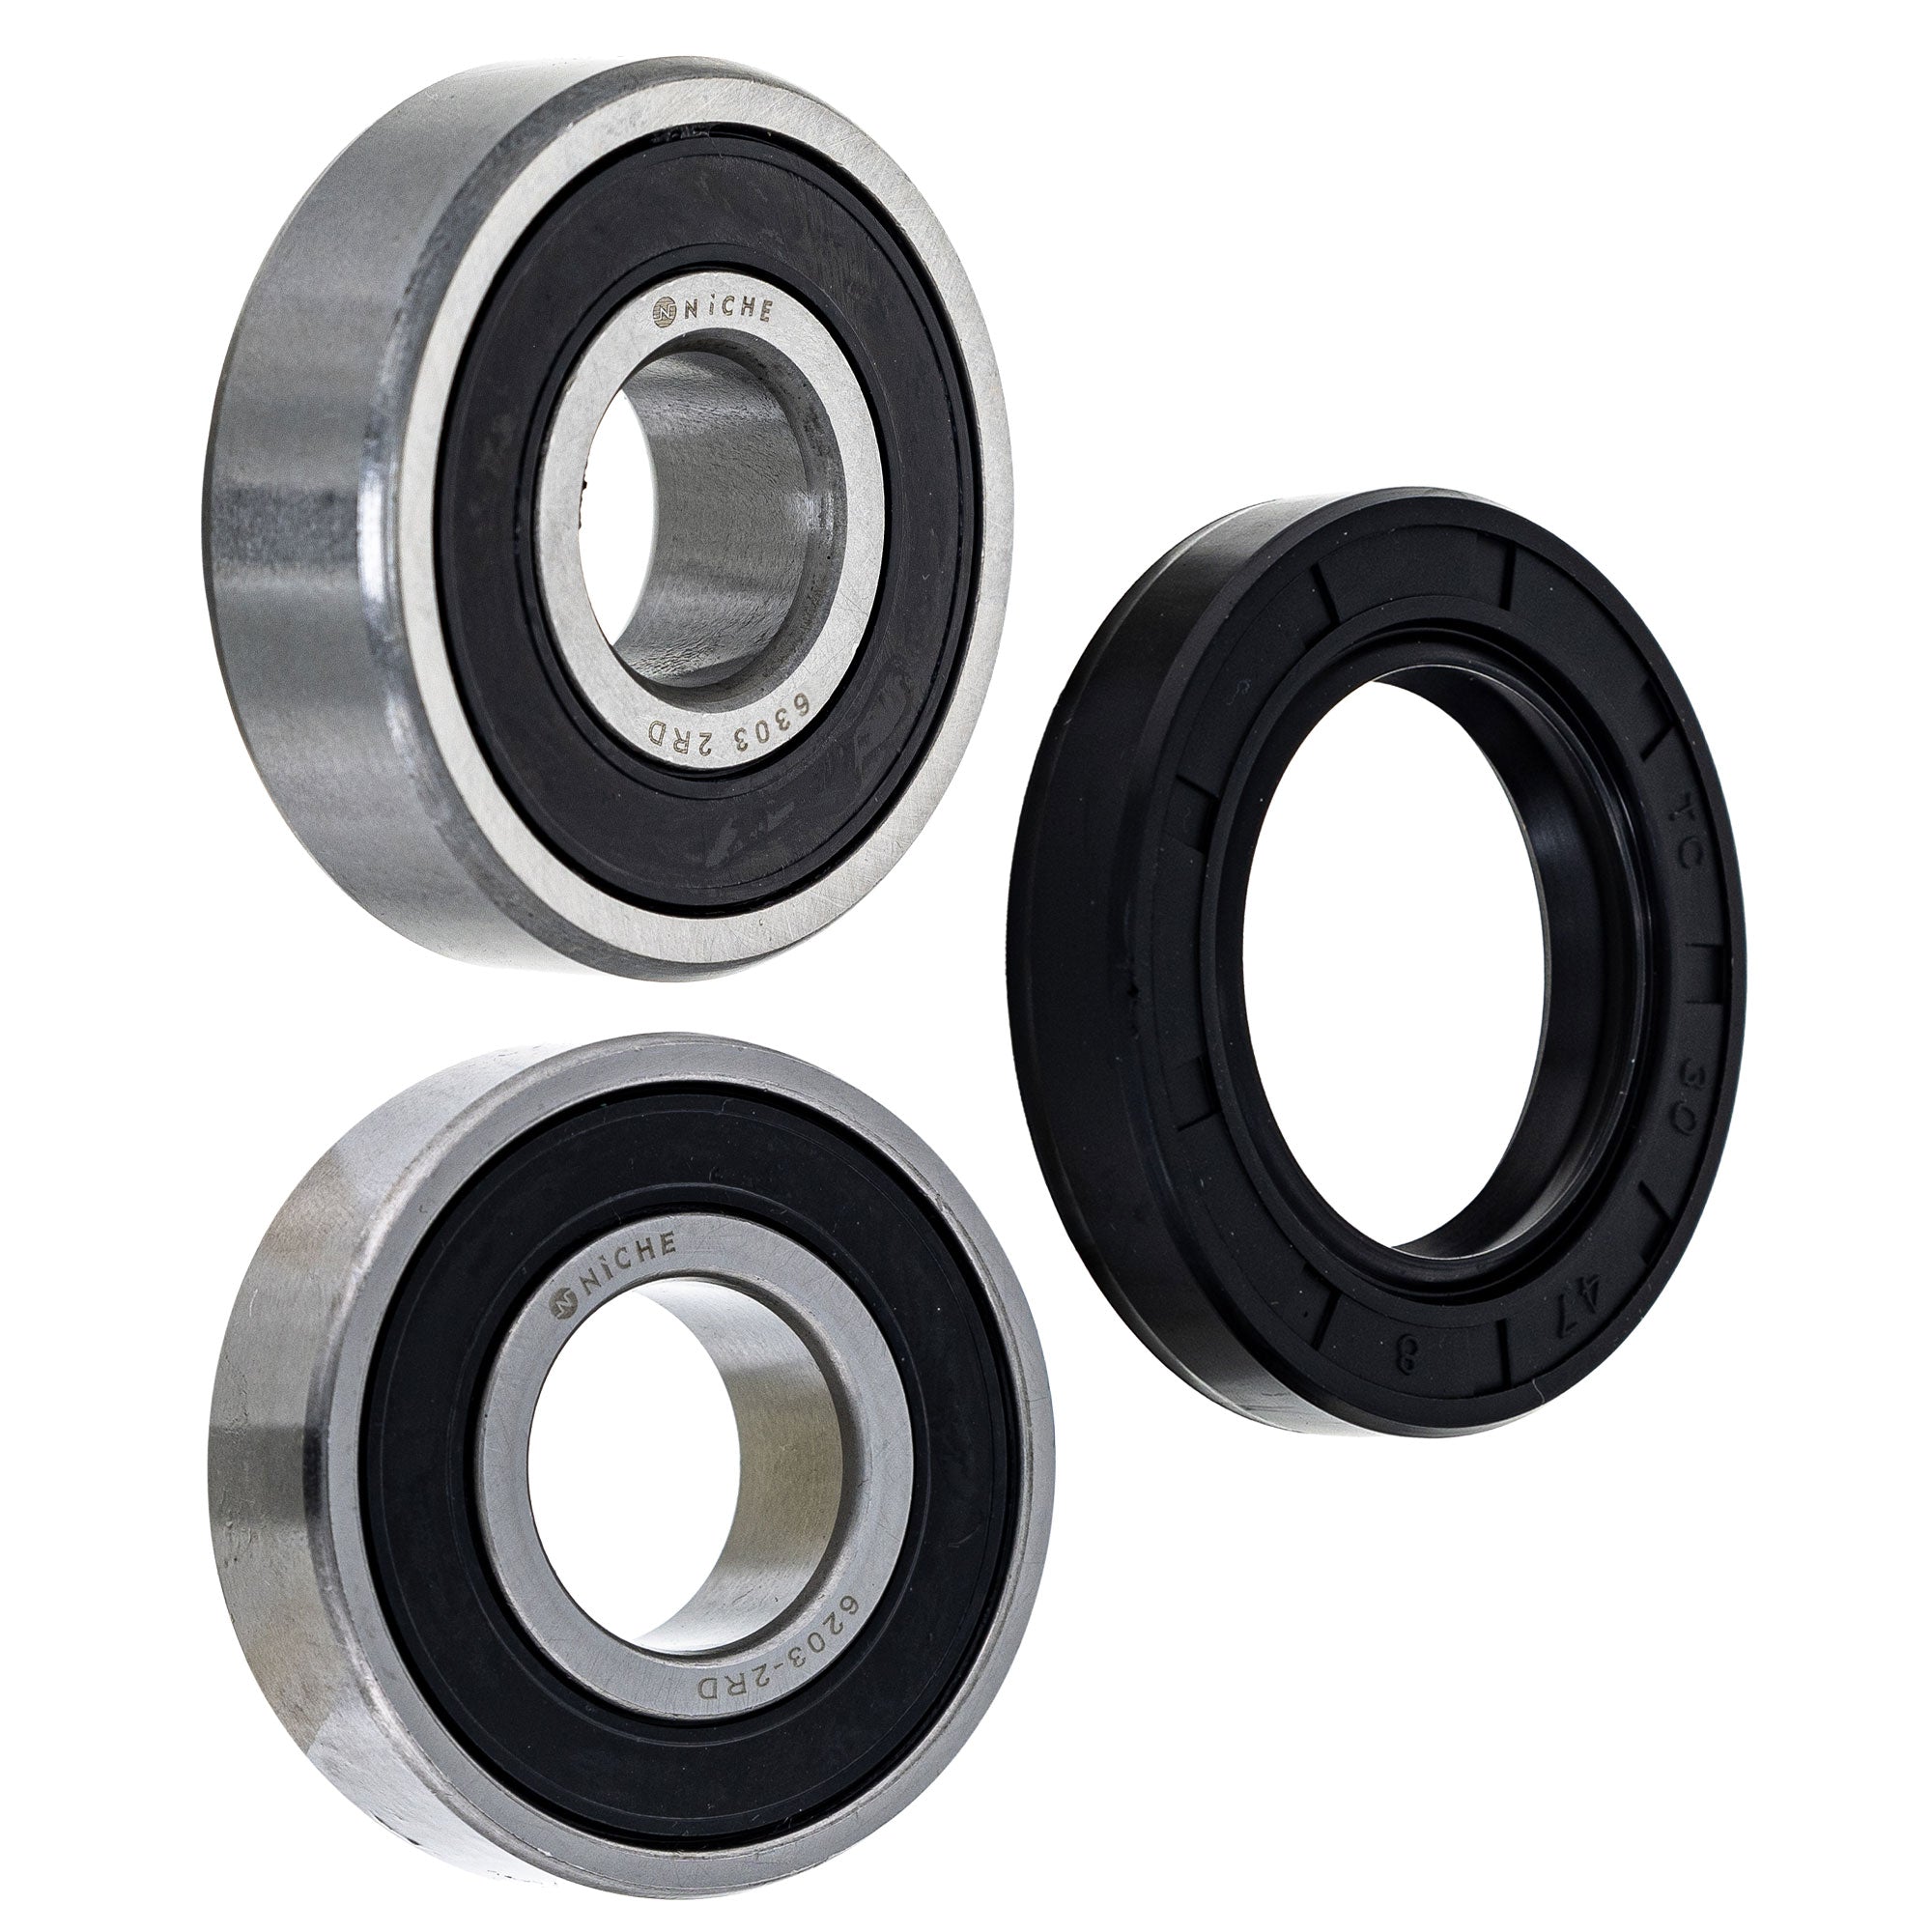 Wheel Bearing Seal Kit for zOTHER XR500R XR500 XR350R XR250R NICHE MK1009002